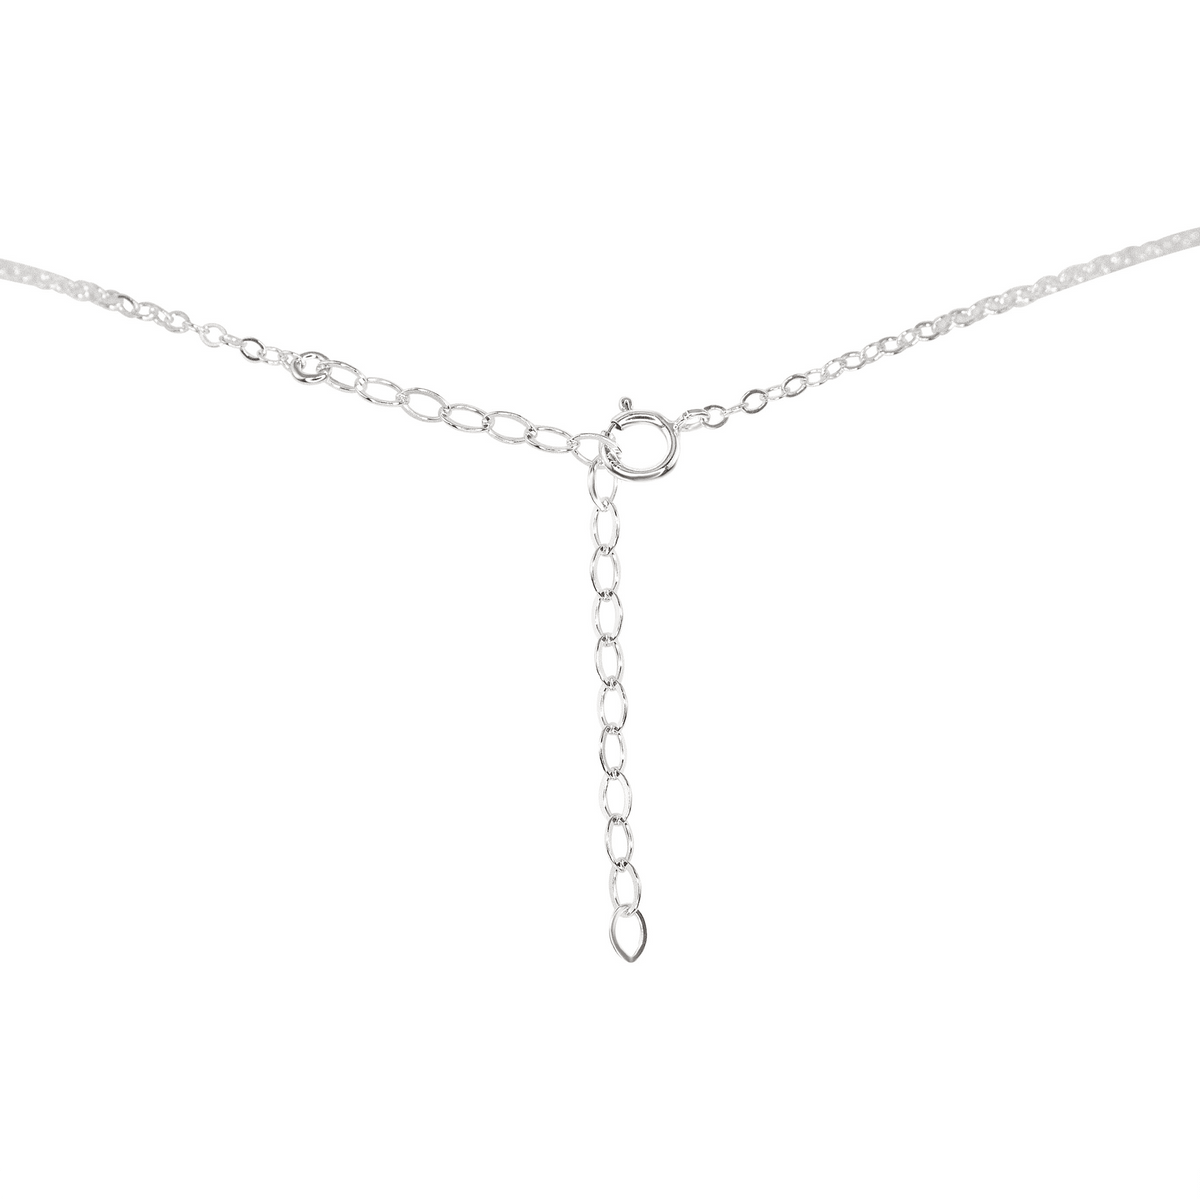 Garnet Boho Lariat Necklace - Garnet Boho Lariat Necklace - 14k Gold Fill - Luna Tide Handmade Crystal Jewellery